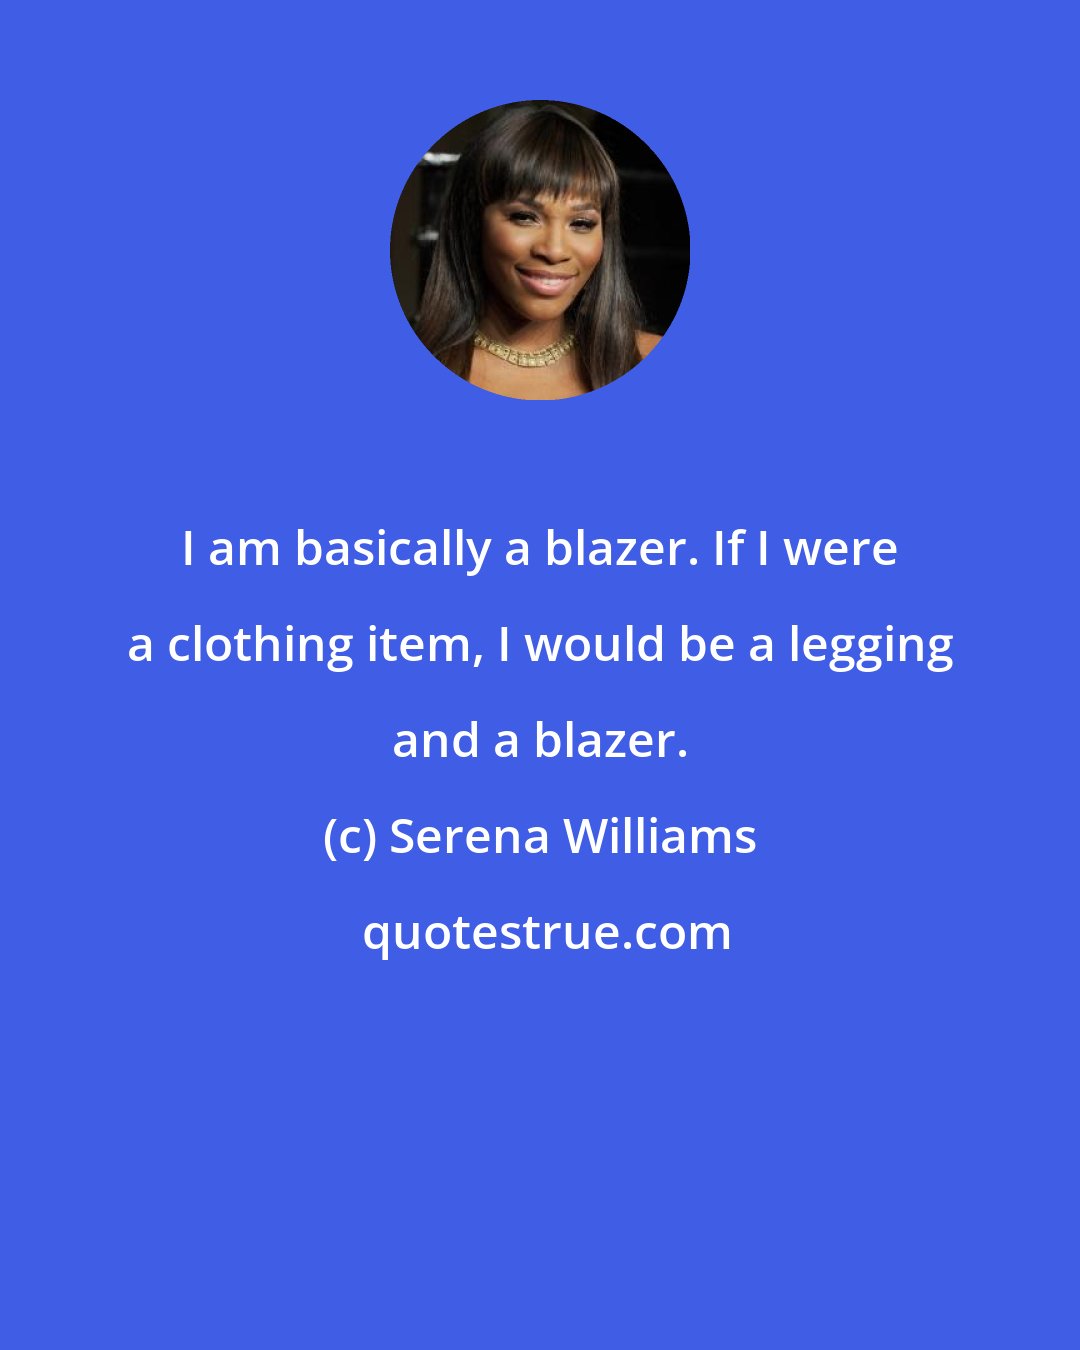 Serena Williams: I am basically a blazer. If I were a clothing item, I would be a legging and a blazer.